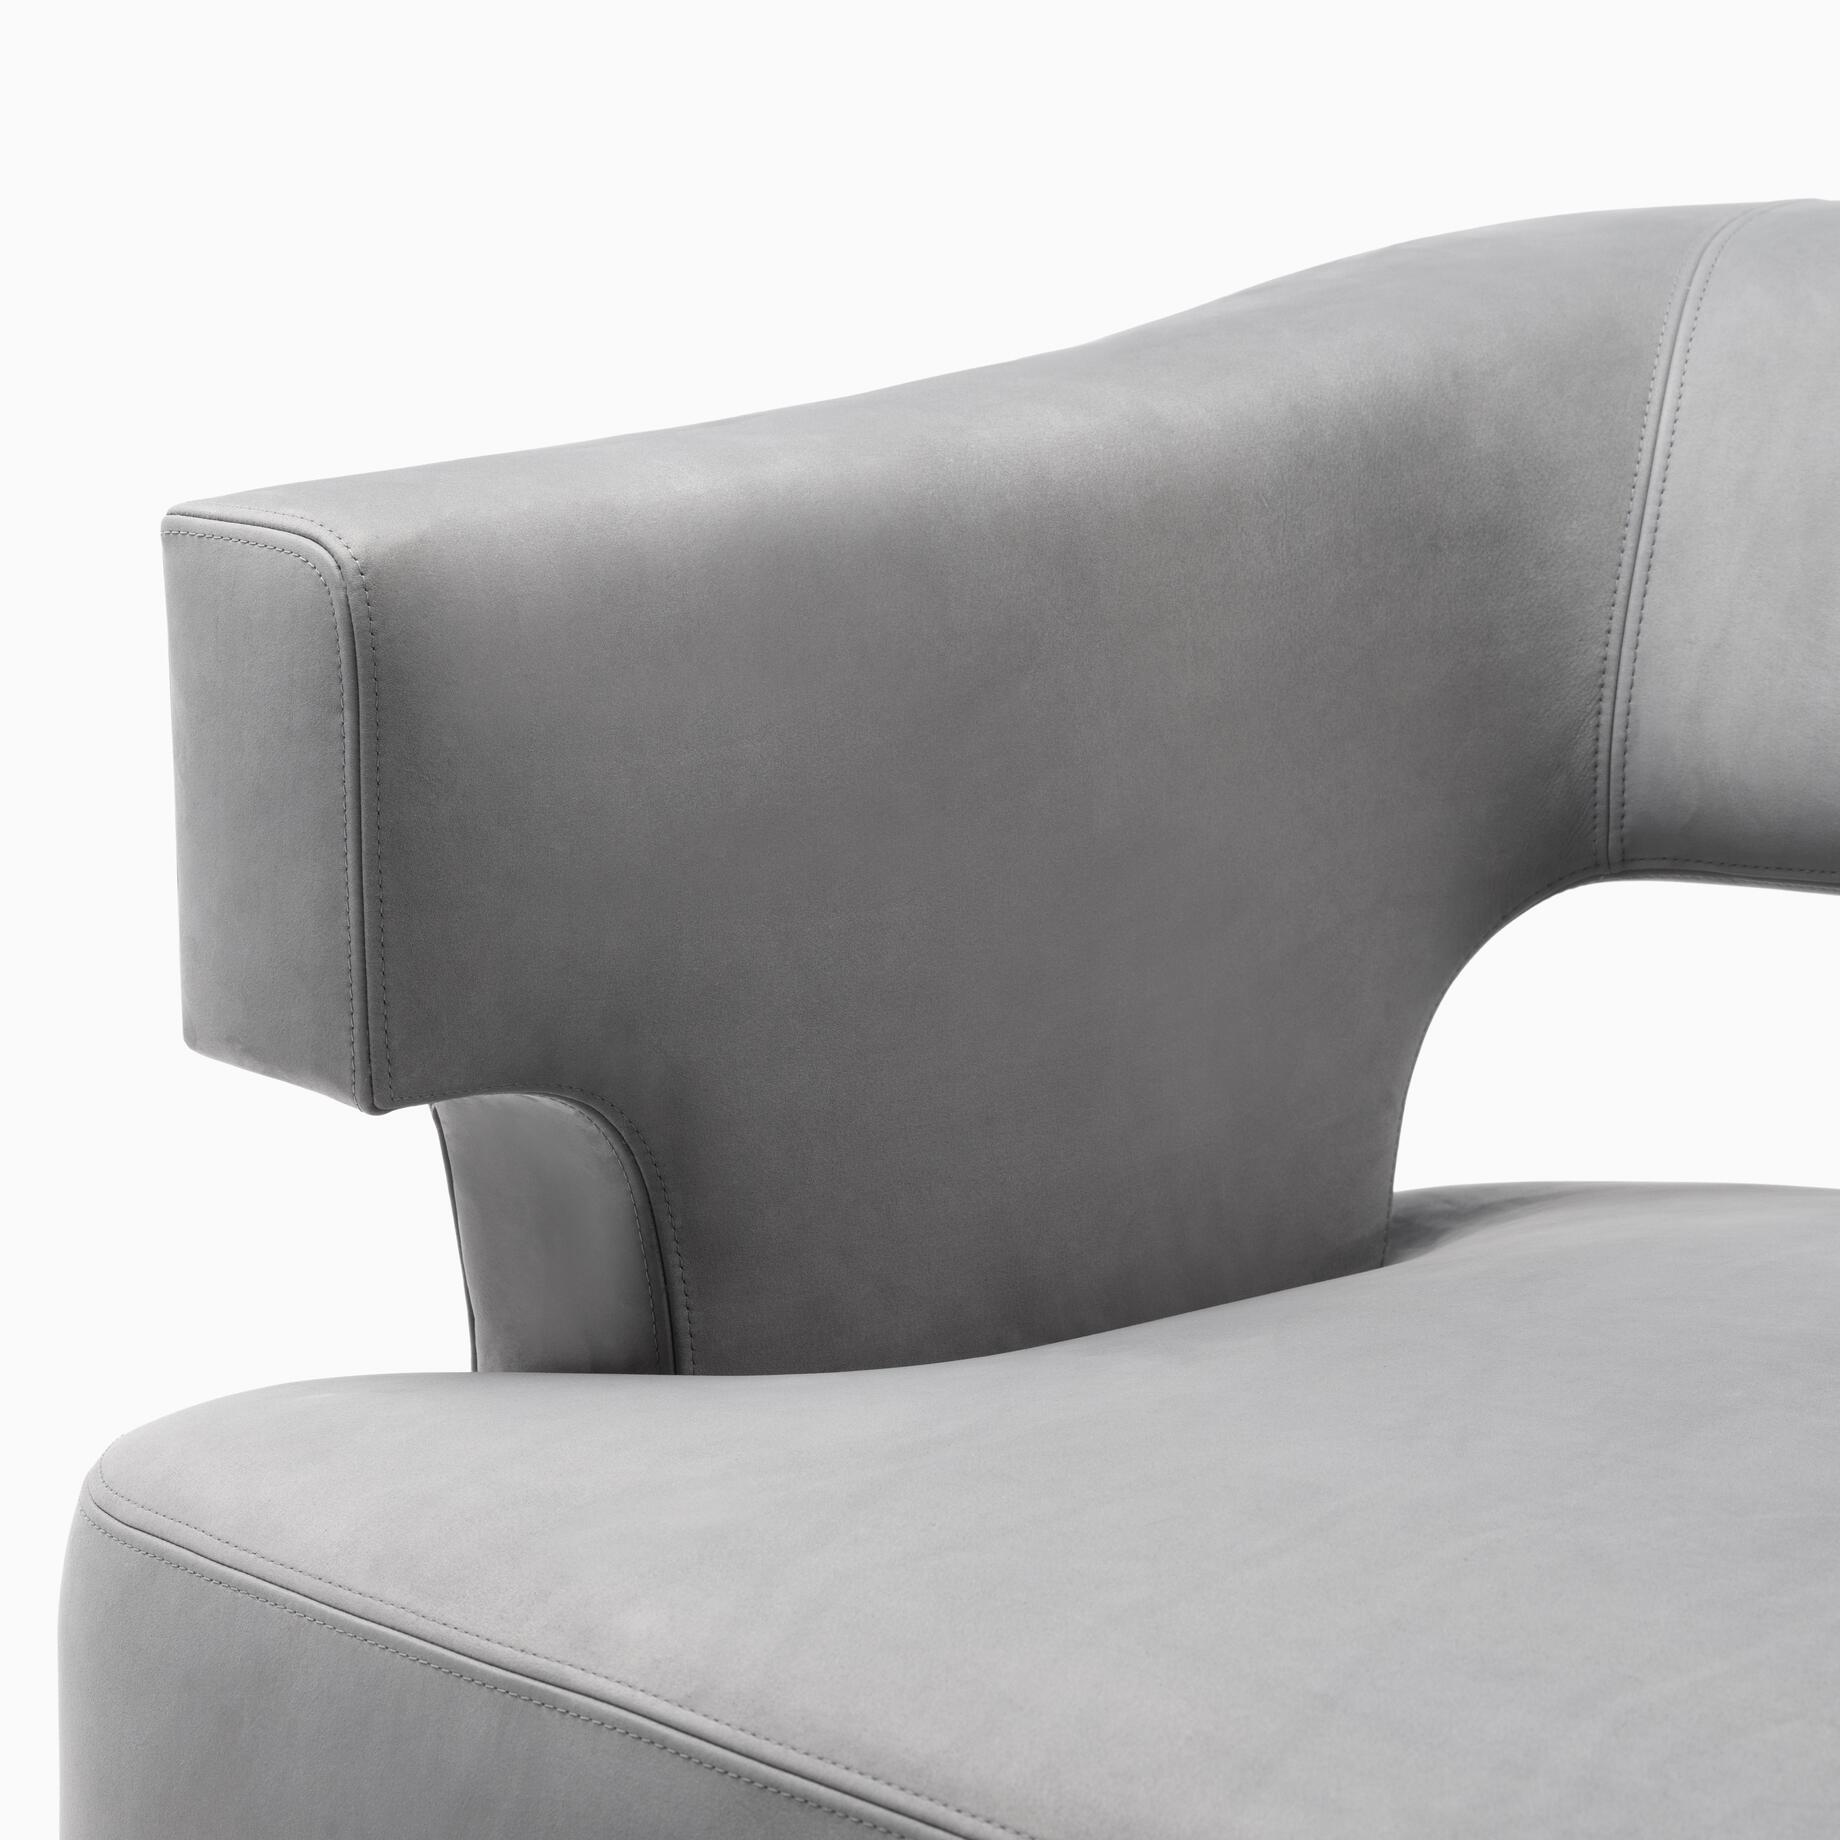 Minerva Lounge Chair